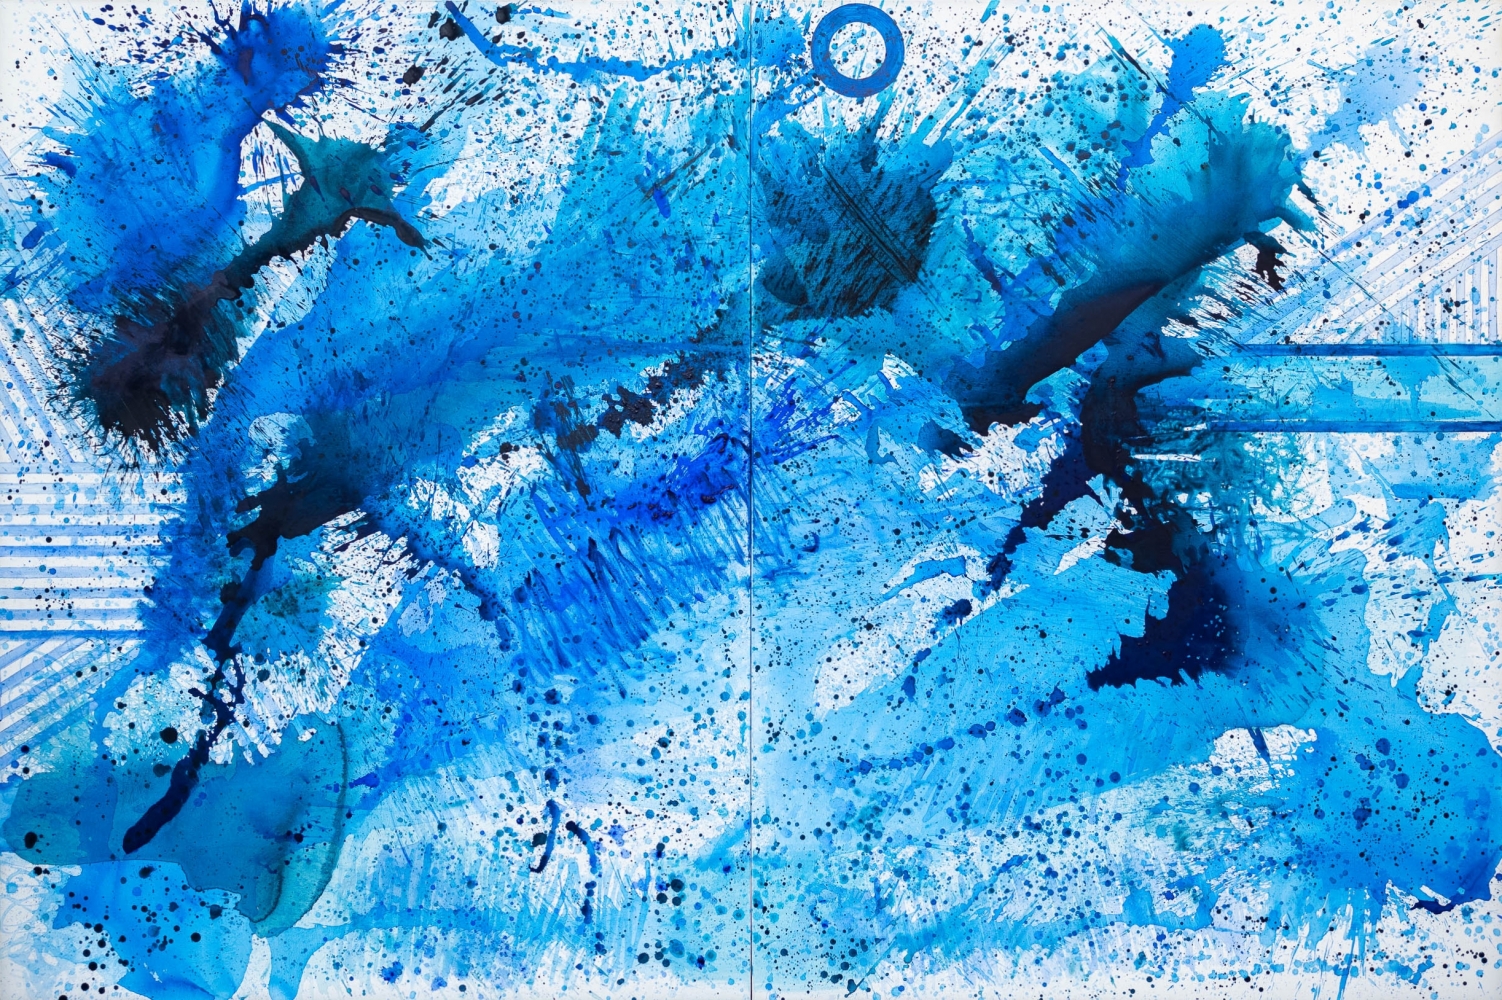 J. Steven Manolis, Splash, 2020, Acrylic on canvas, 96 x 144 inches, $175,000, blue abstract art